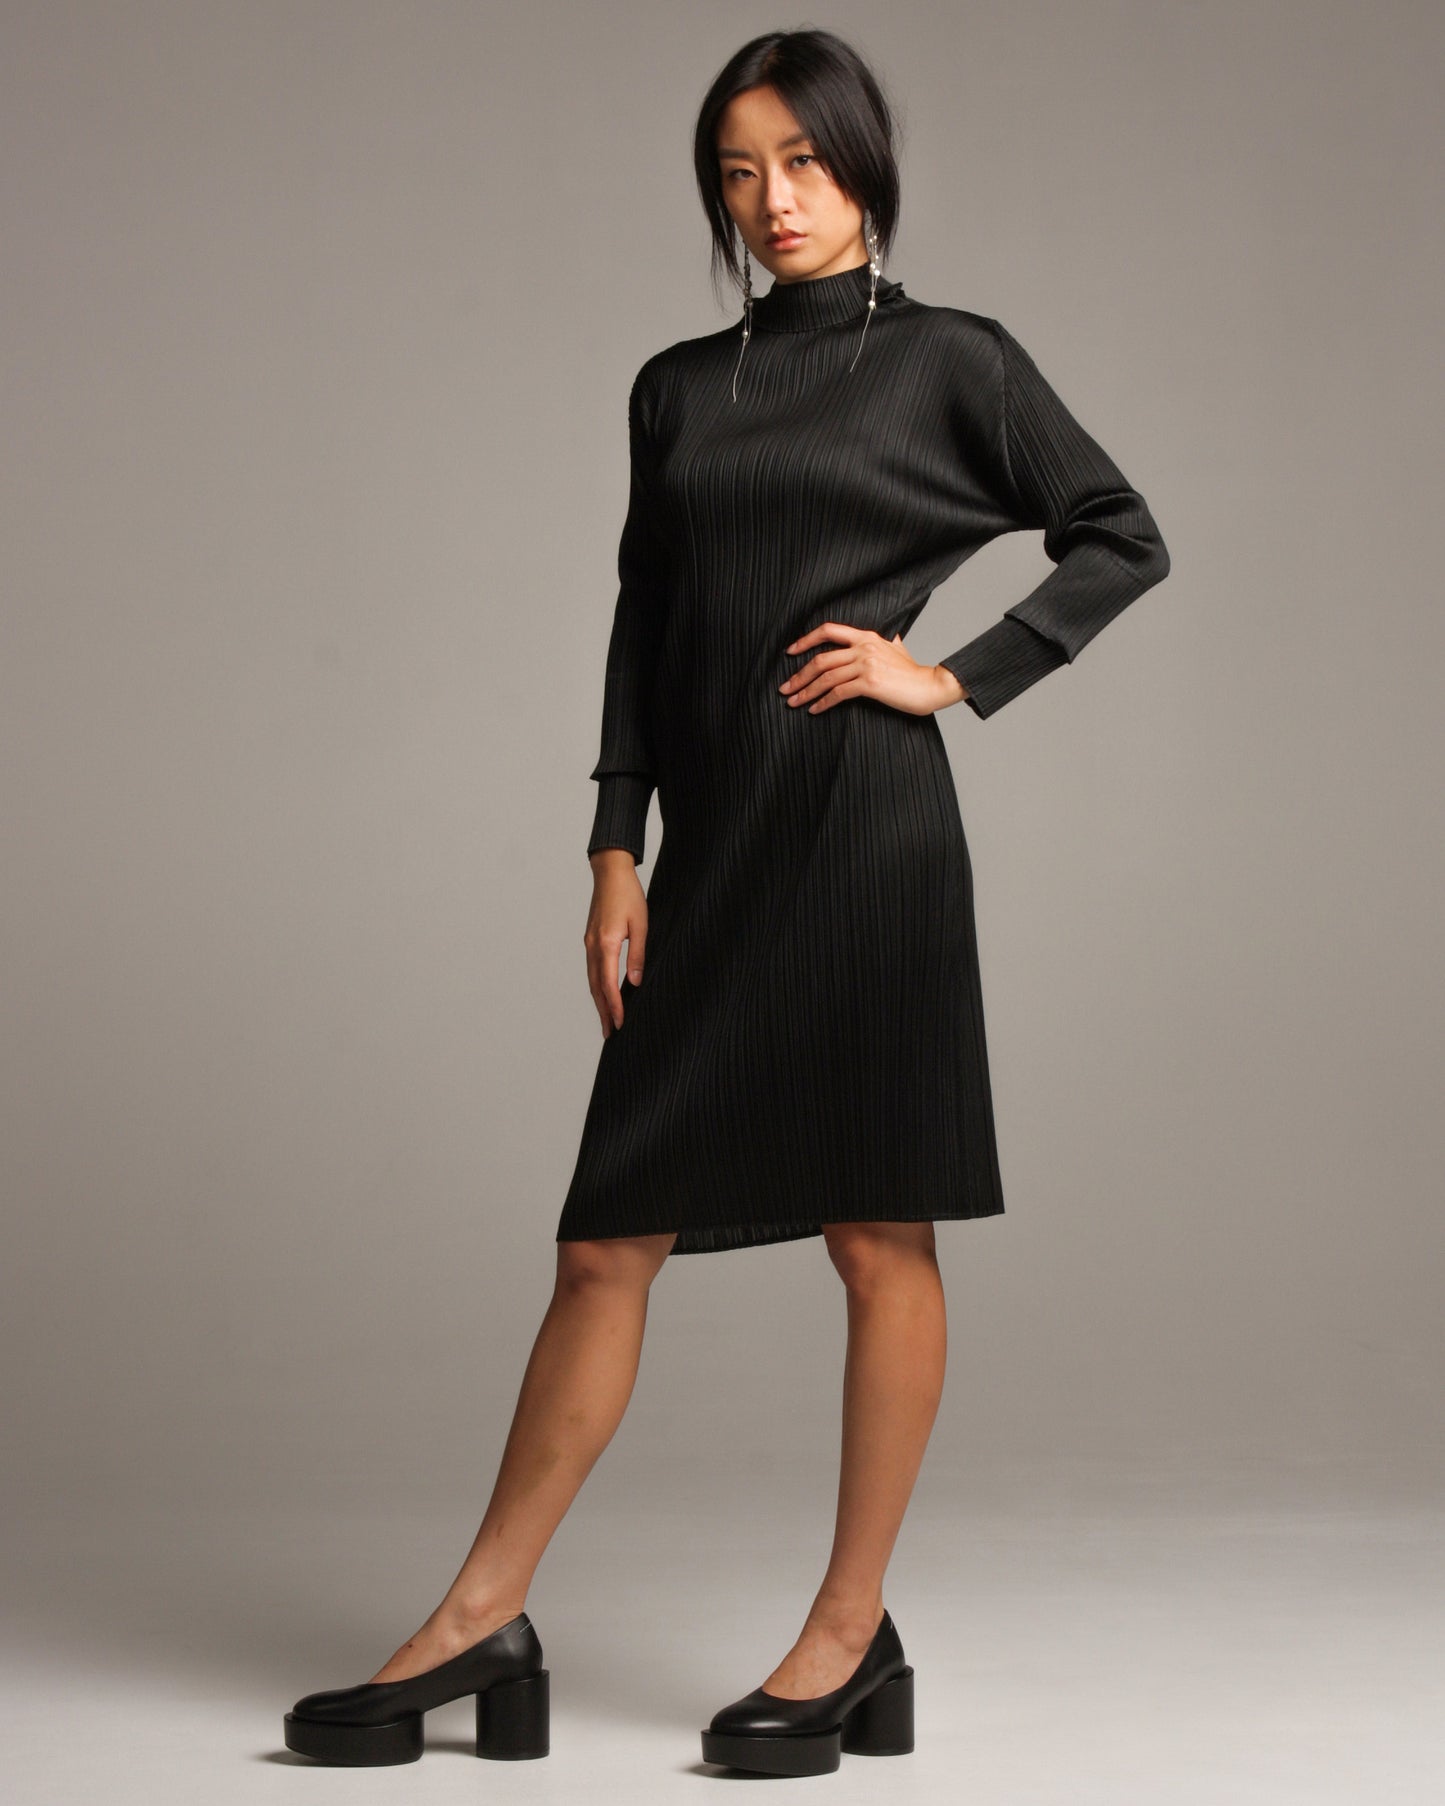 Classic Black Long Sleeve Dress